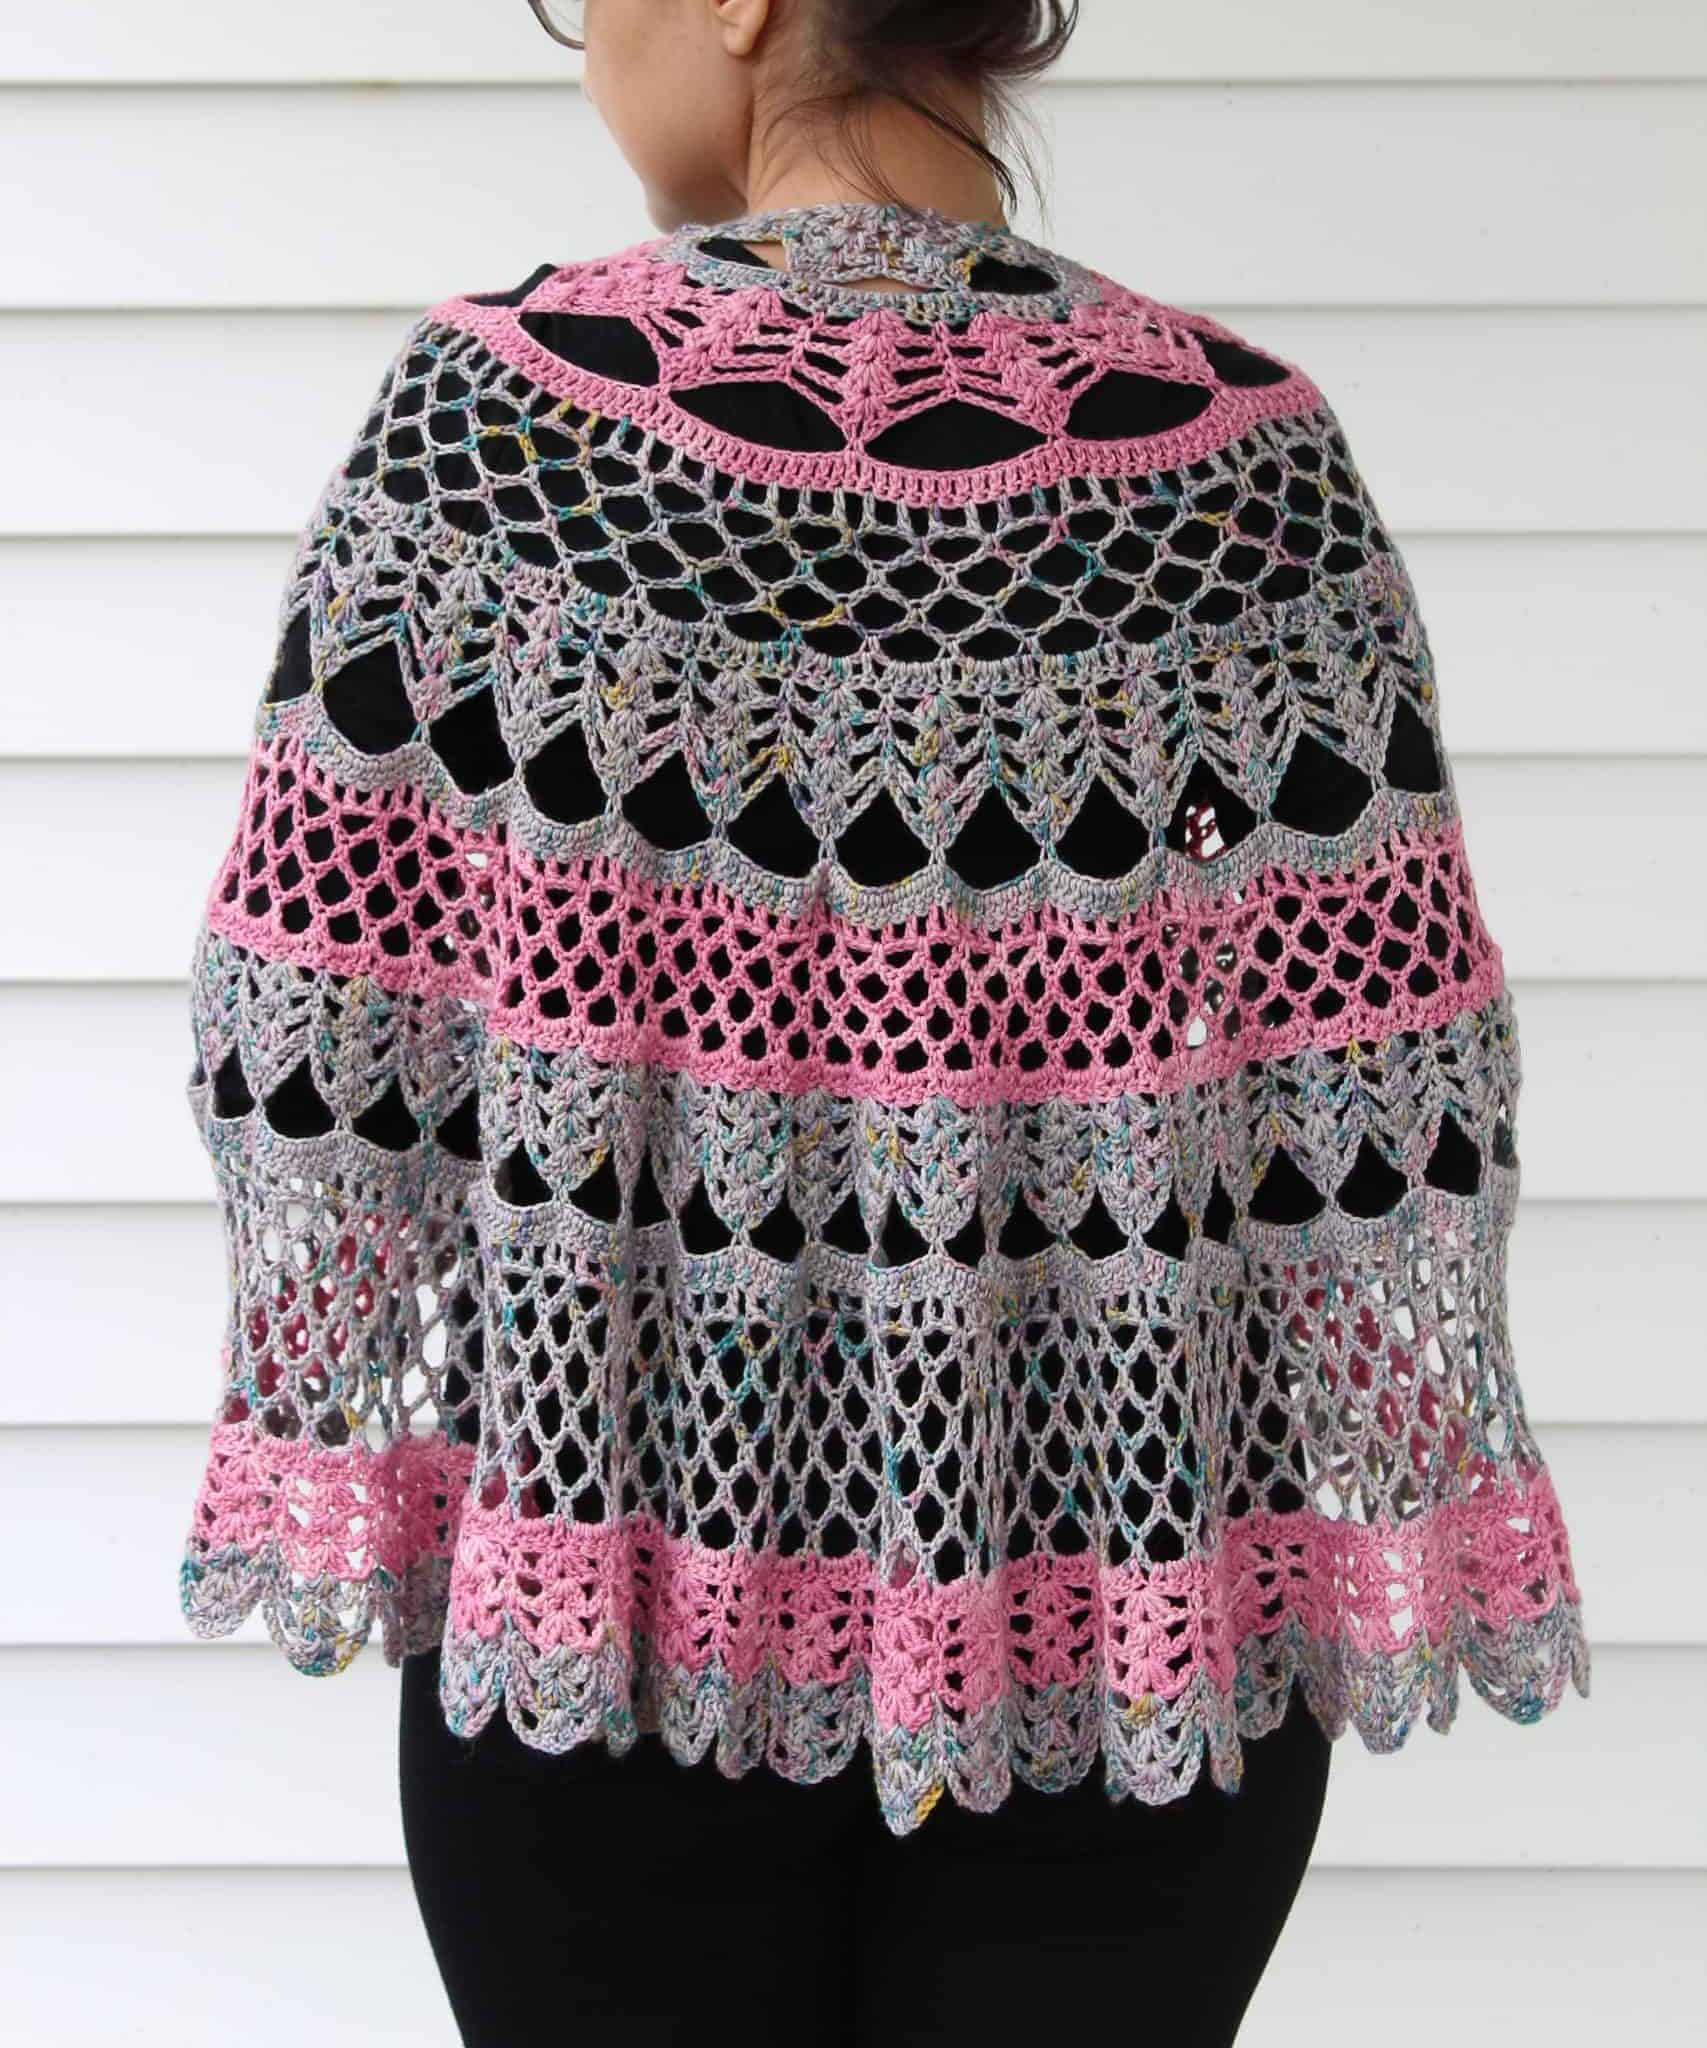 Crochet Heart Granny Square Tote Bag matcha Latte 